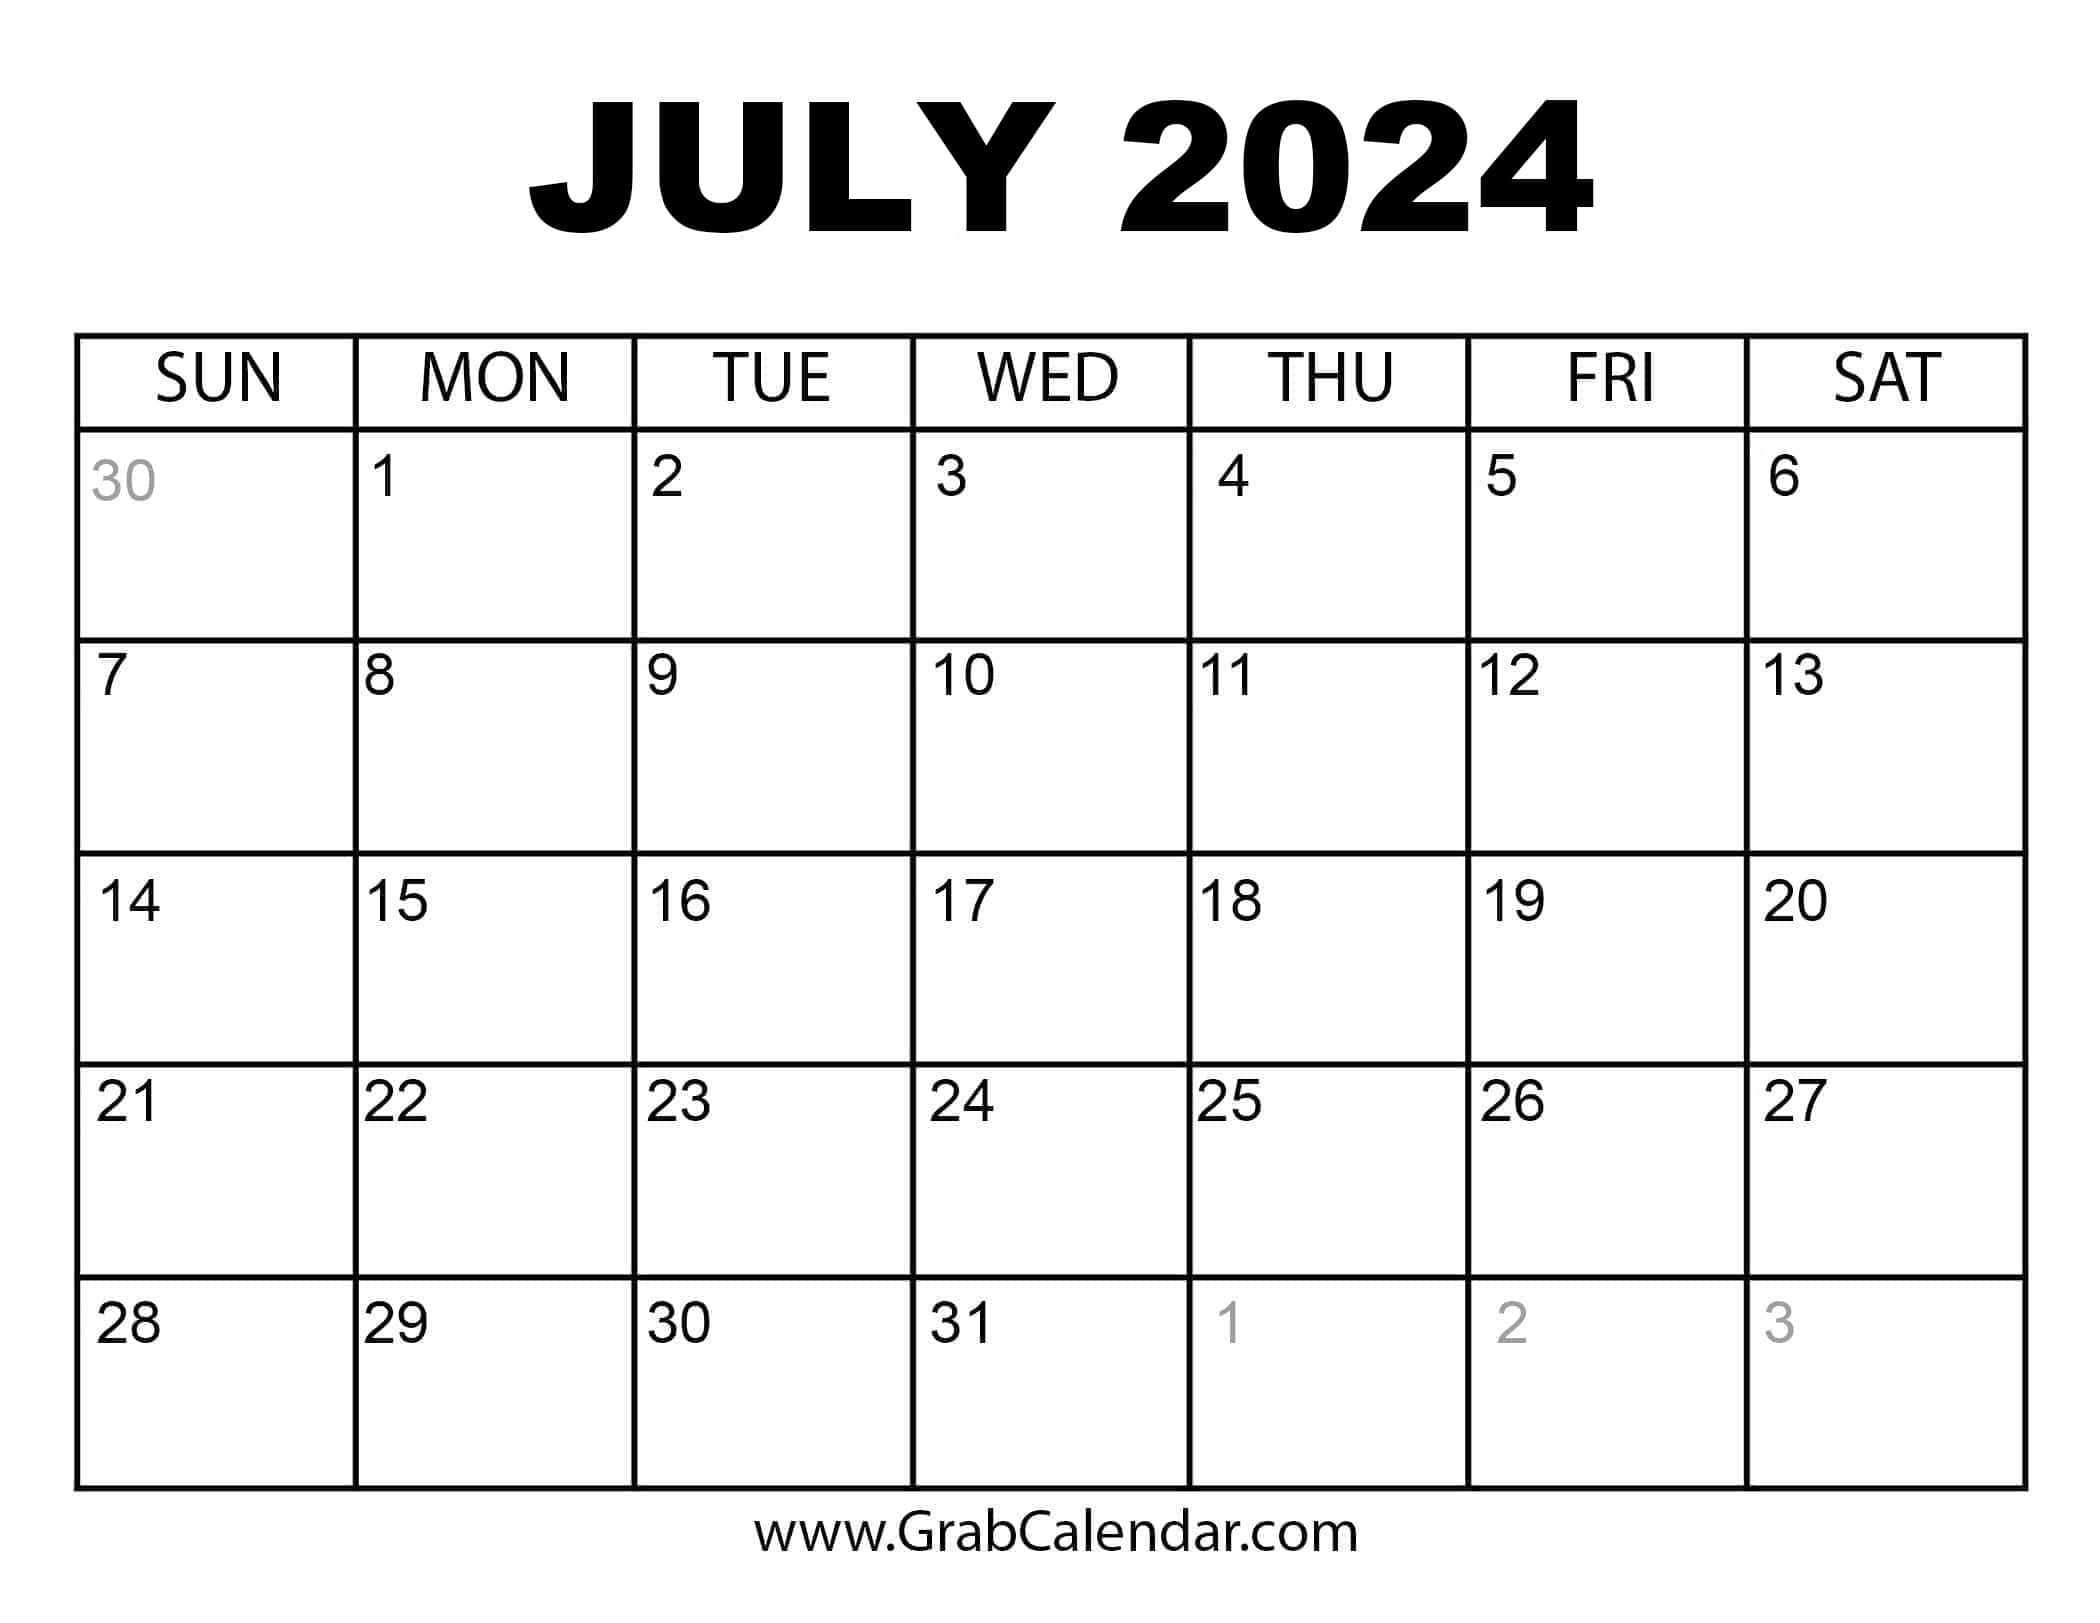 July 2024 Calendar